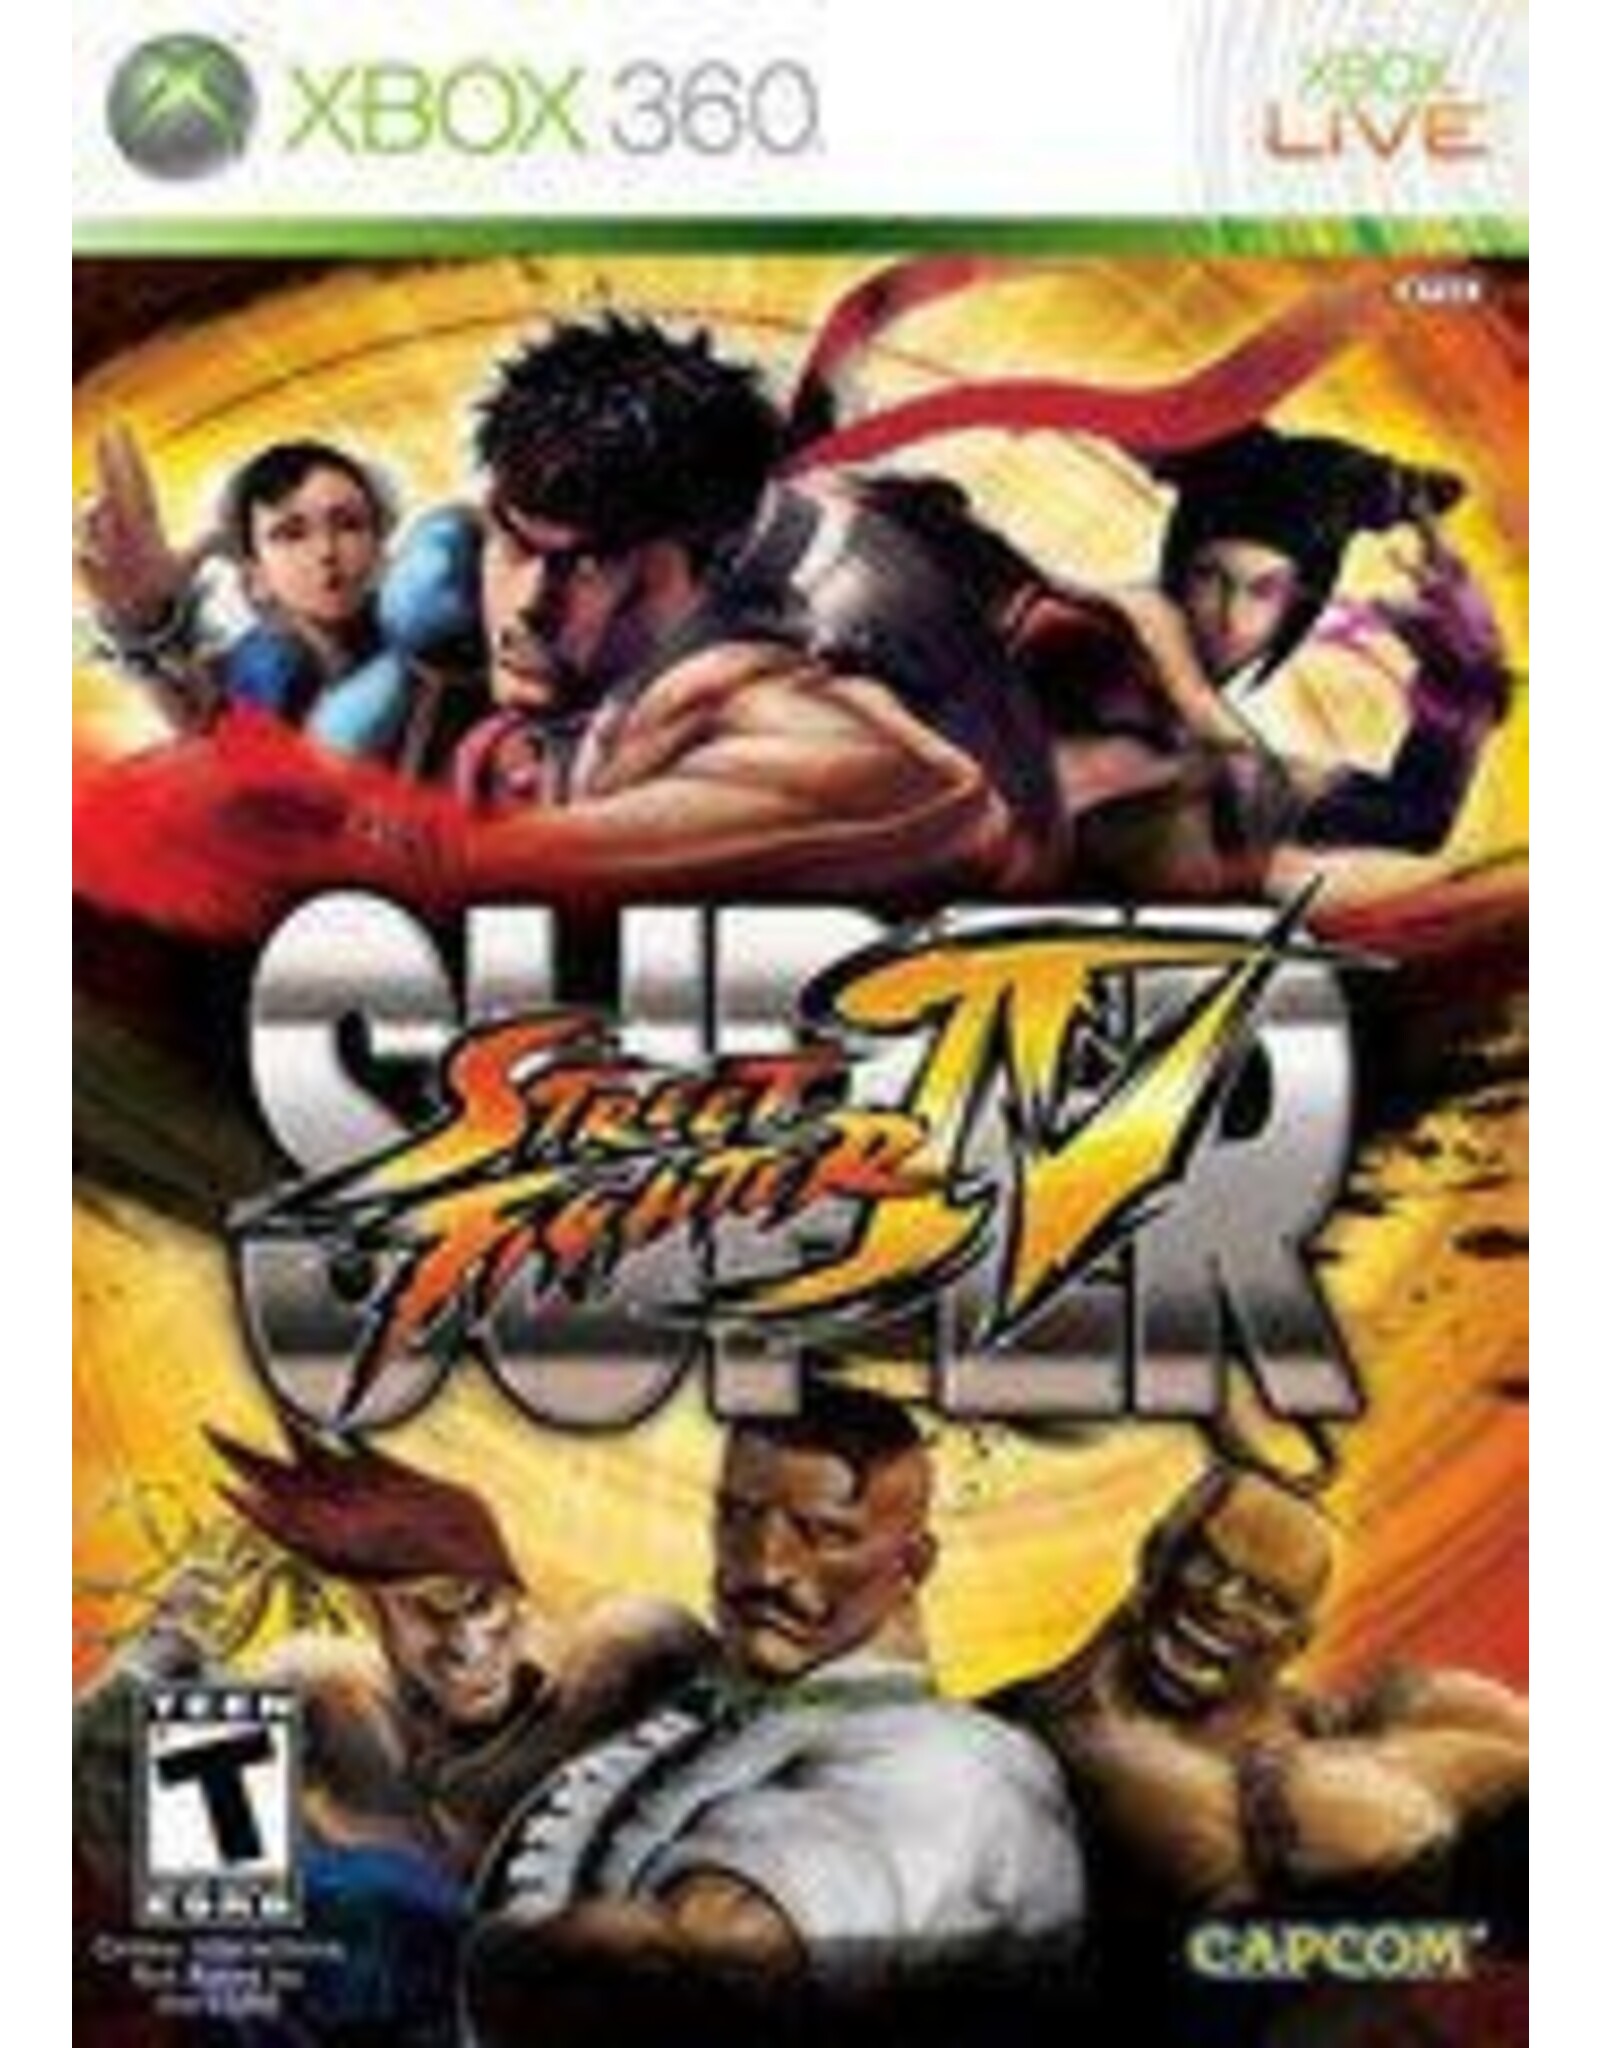 Xbox 360 Super Street Fighter IV (CiB)